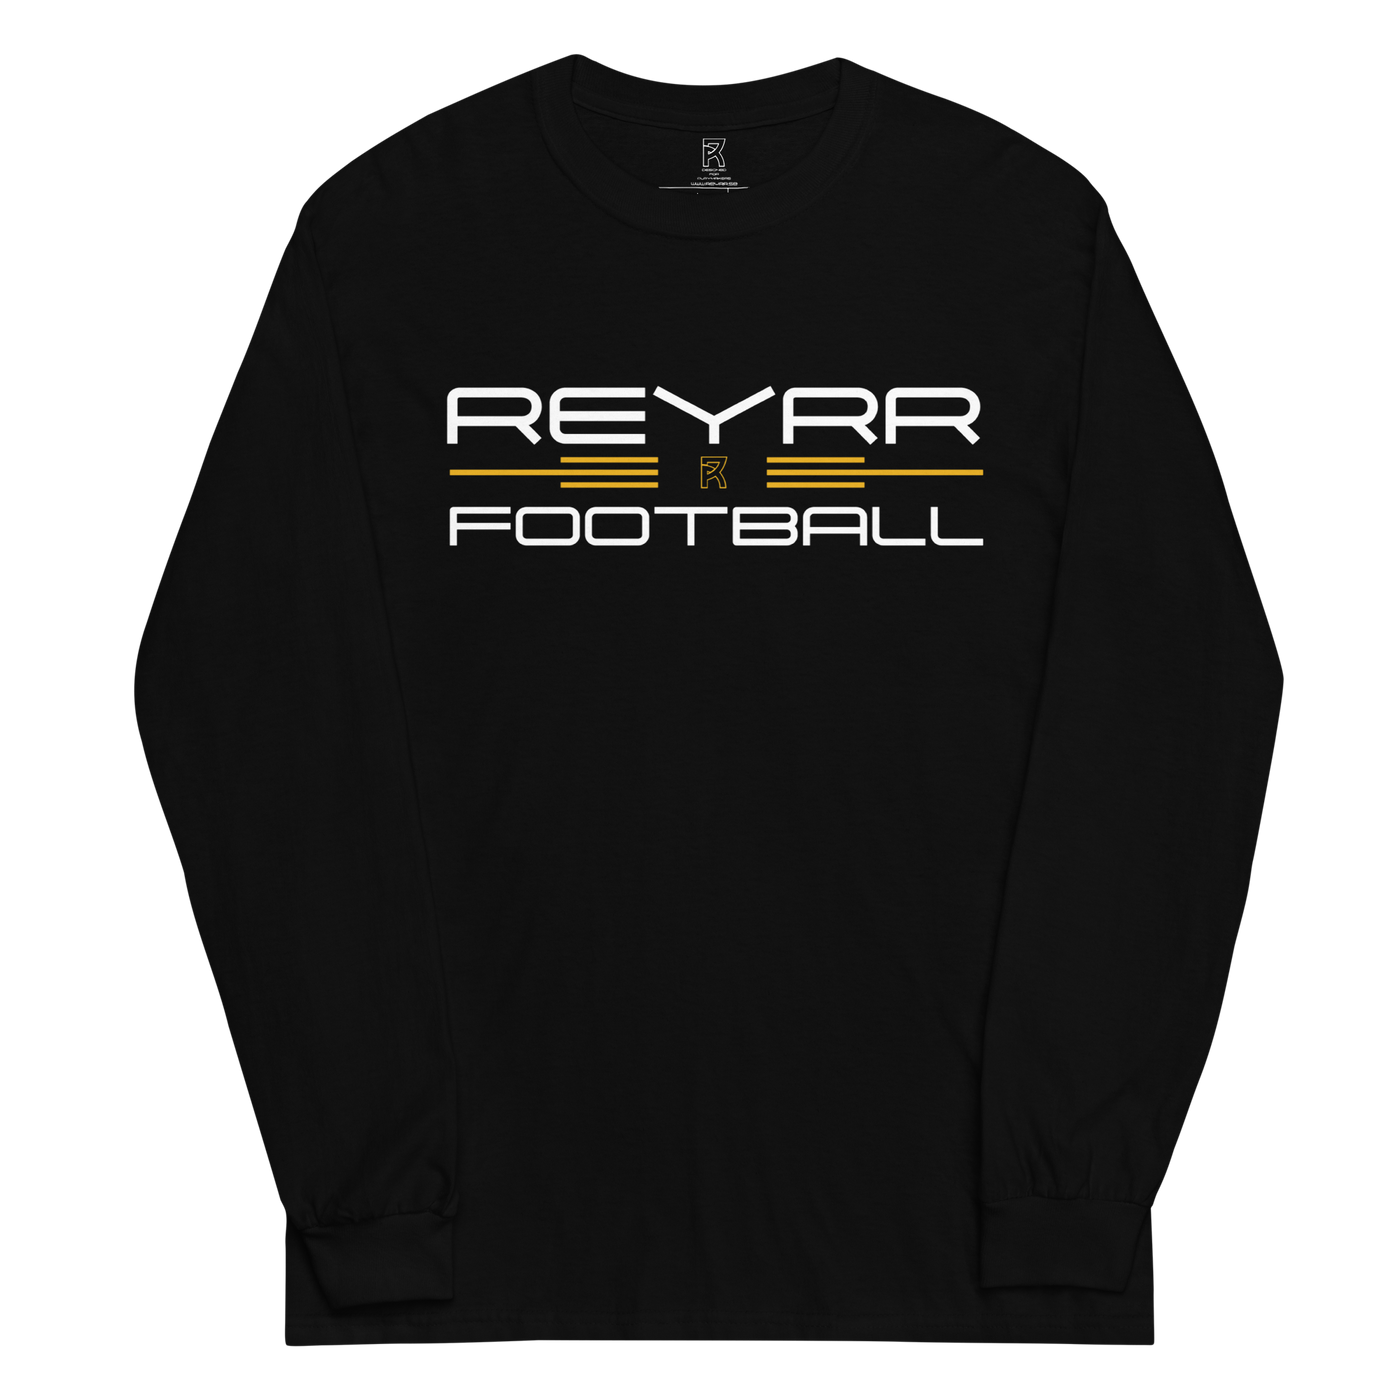 Reyrr Long Sleeve Shirt - Premium  from Reyrr Athletics - Shop now at Reyrr Athletics